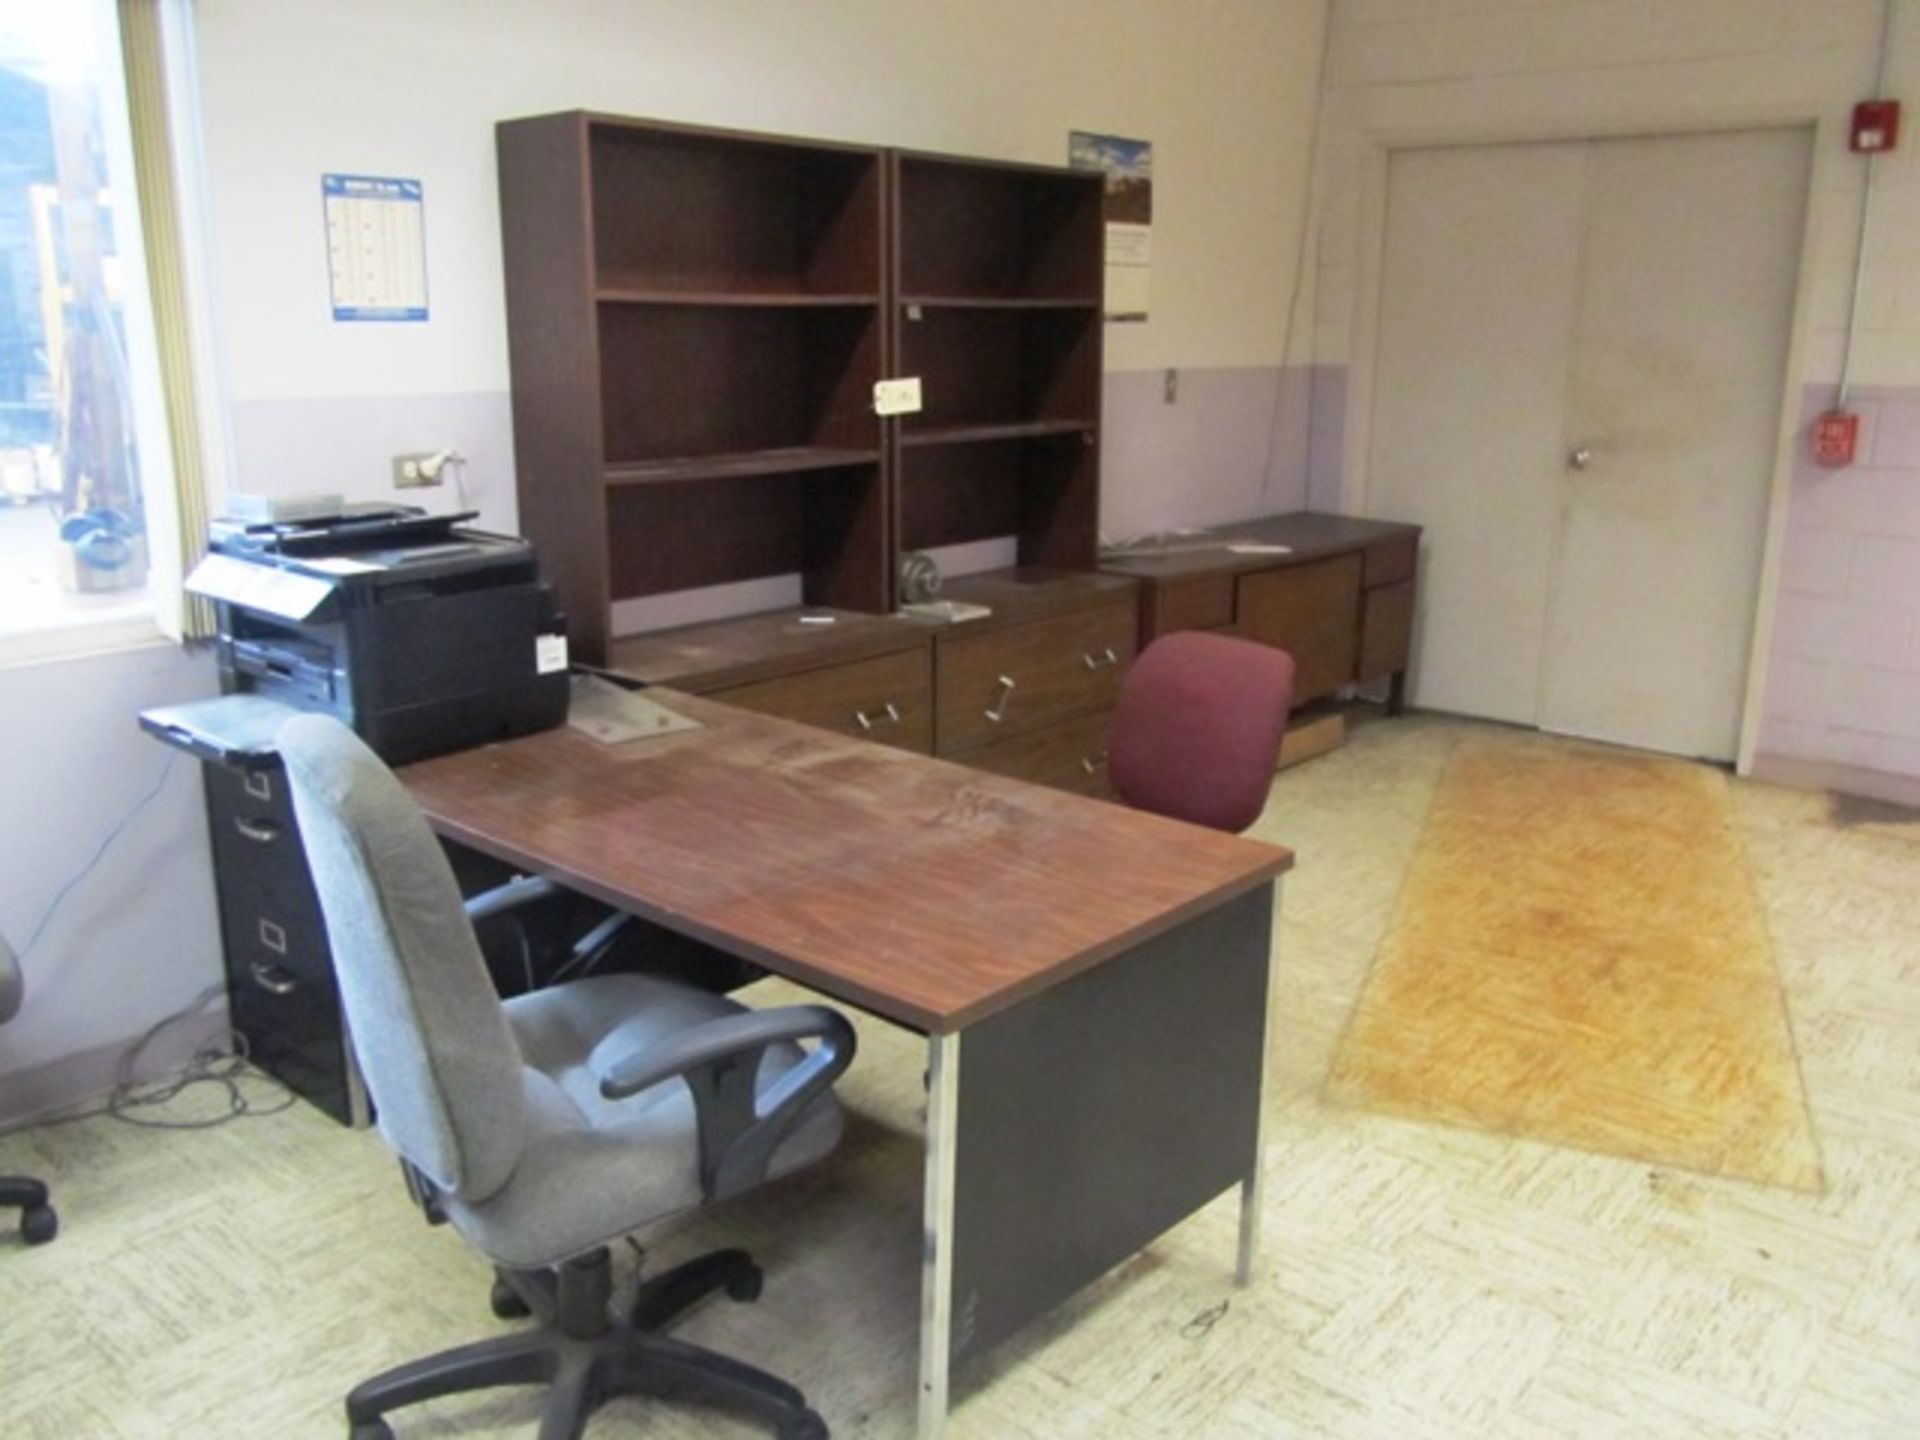 Balance of Room consisting of Desks, Credenza, Bookshelf